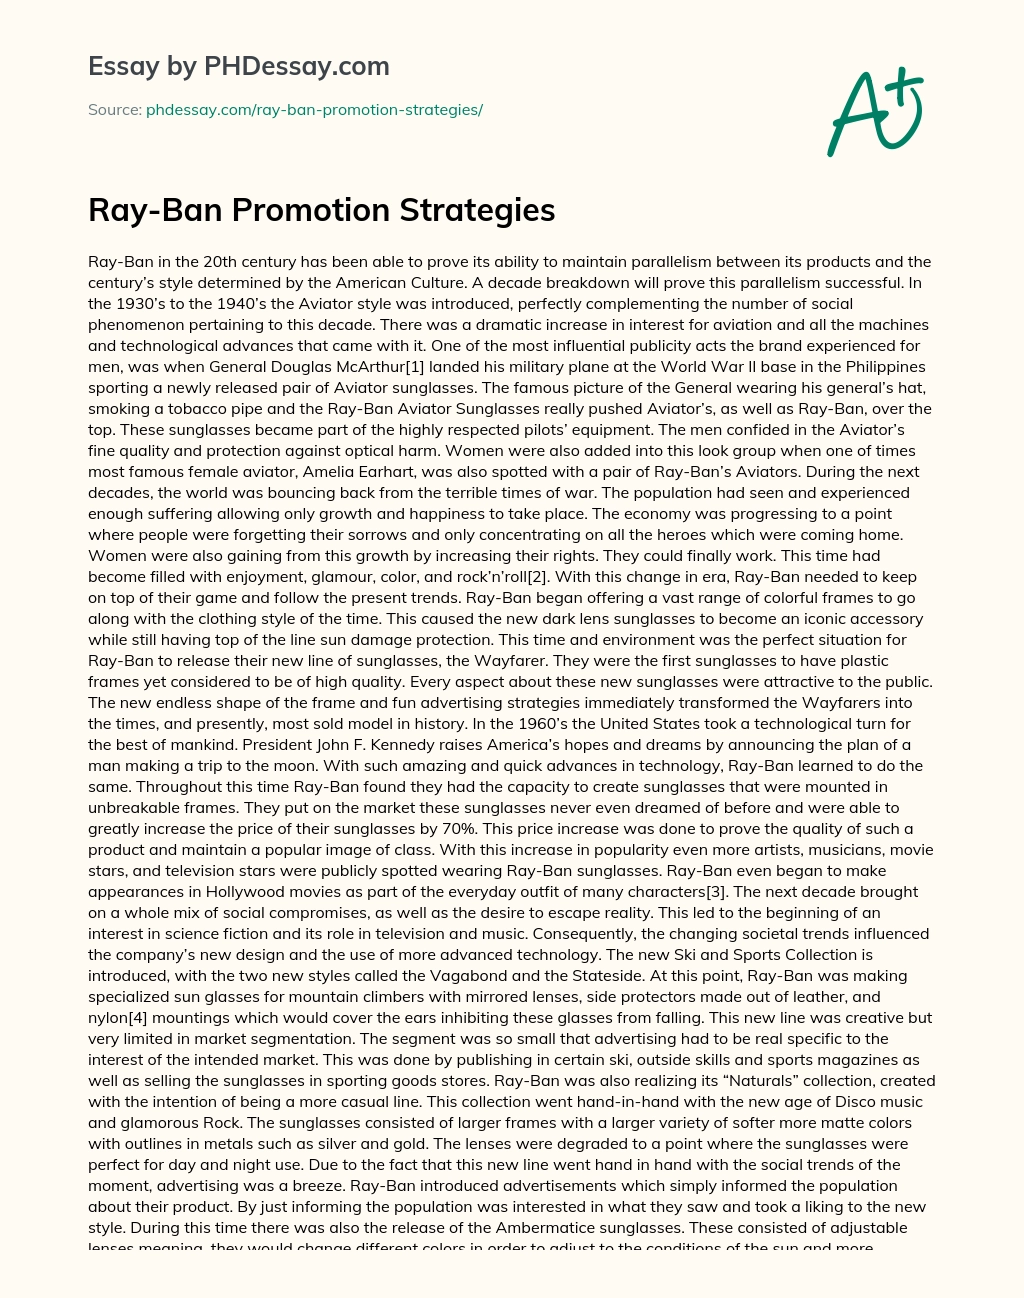 Ray-Ban Promotion Strategies essay